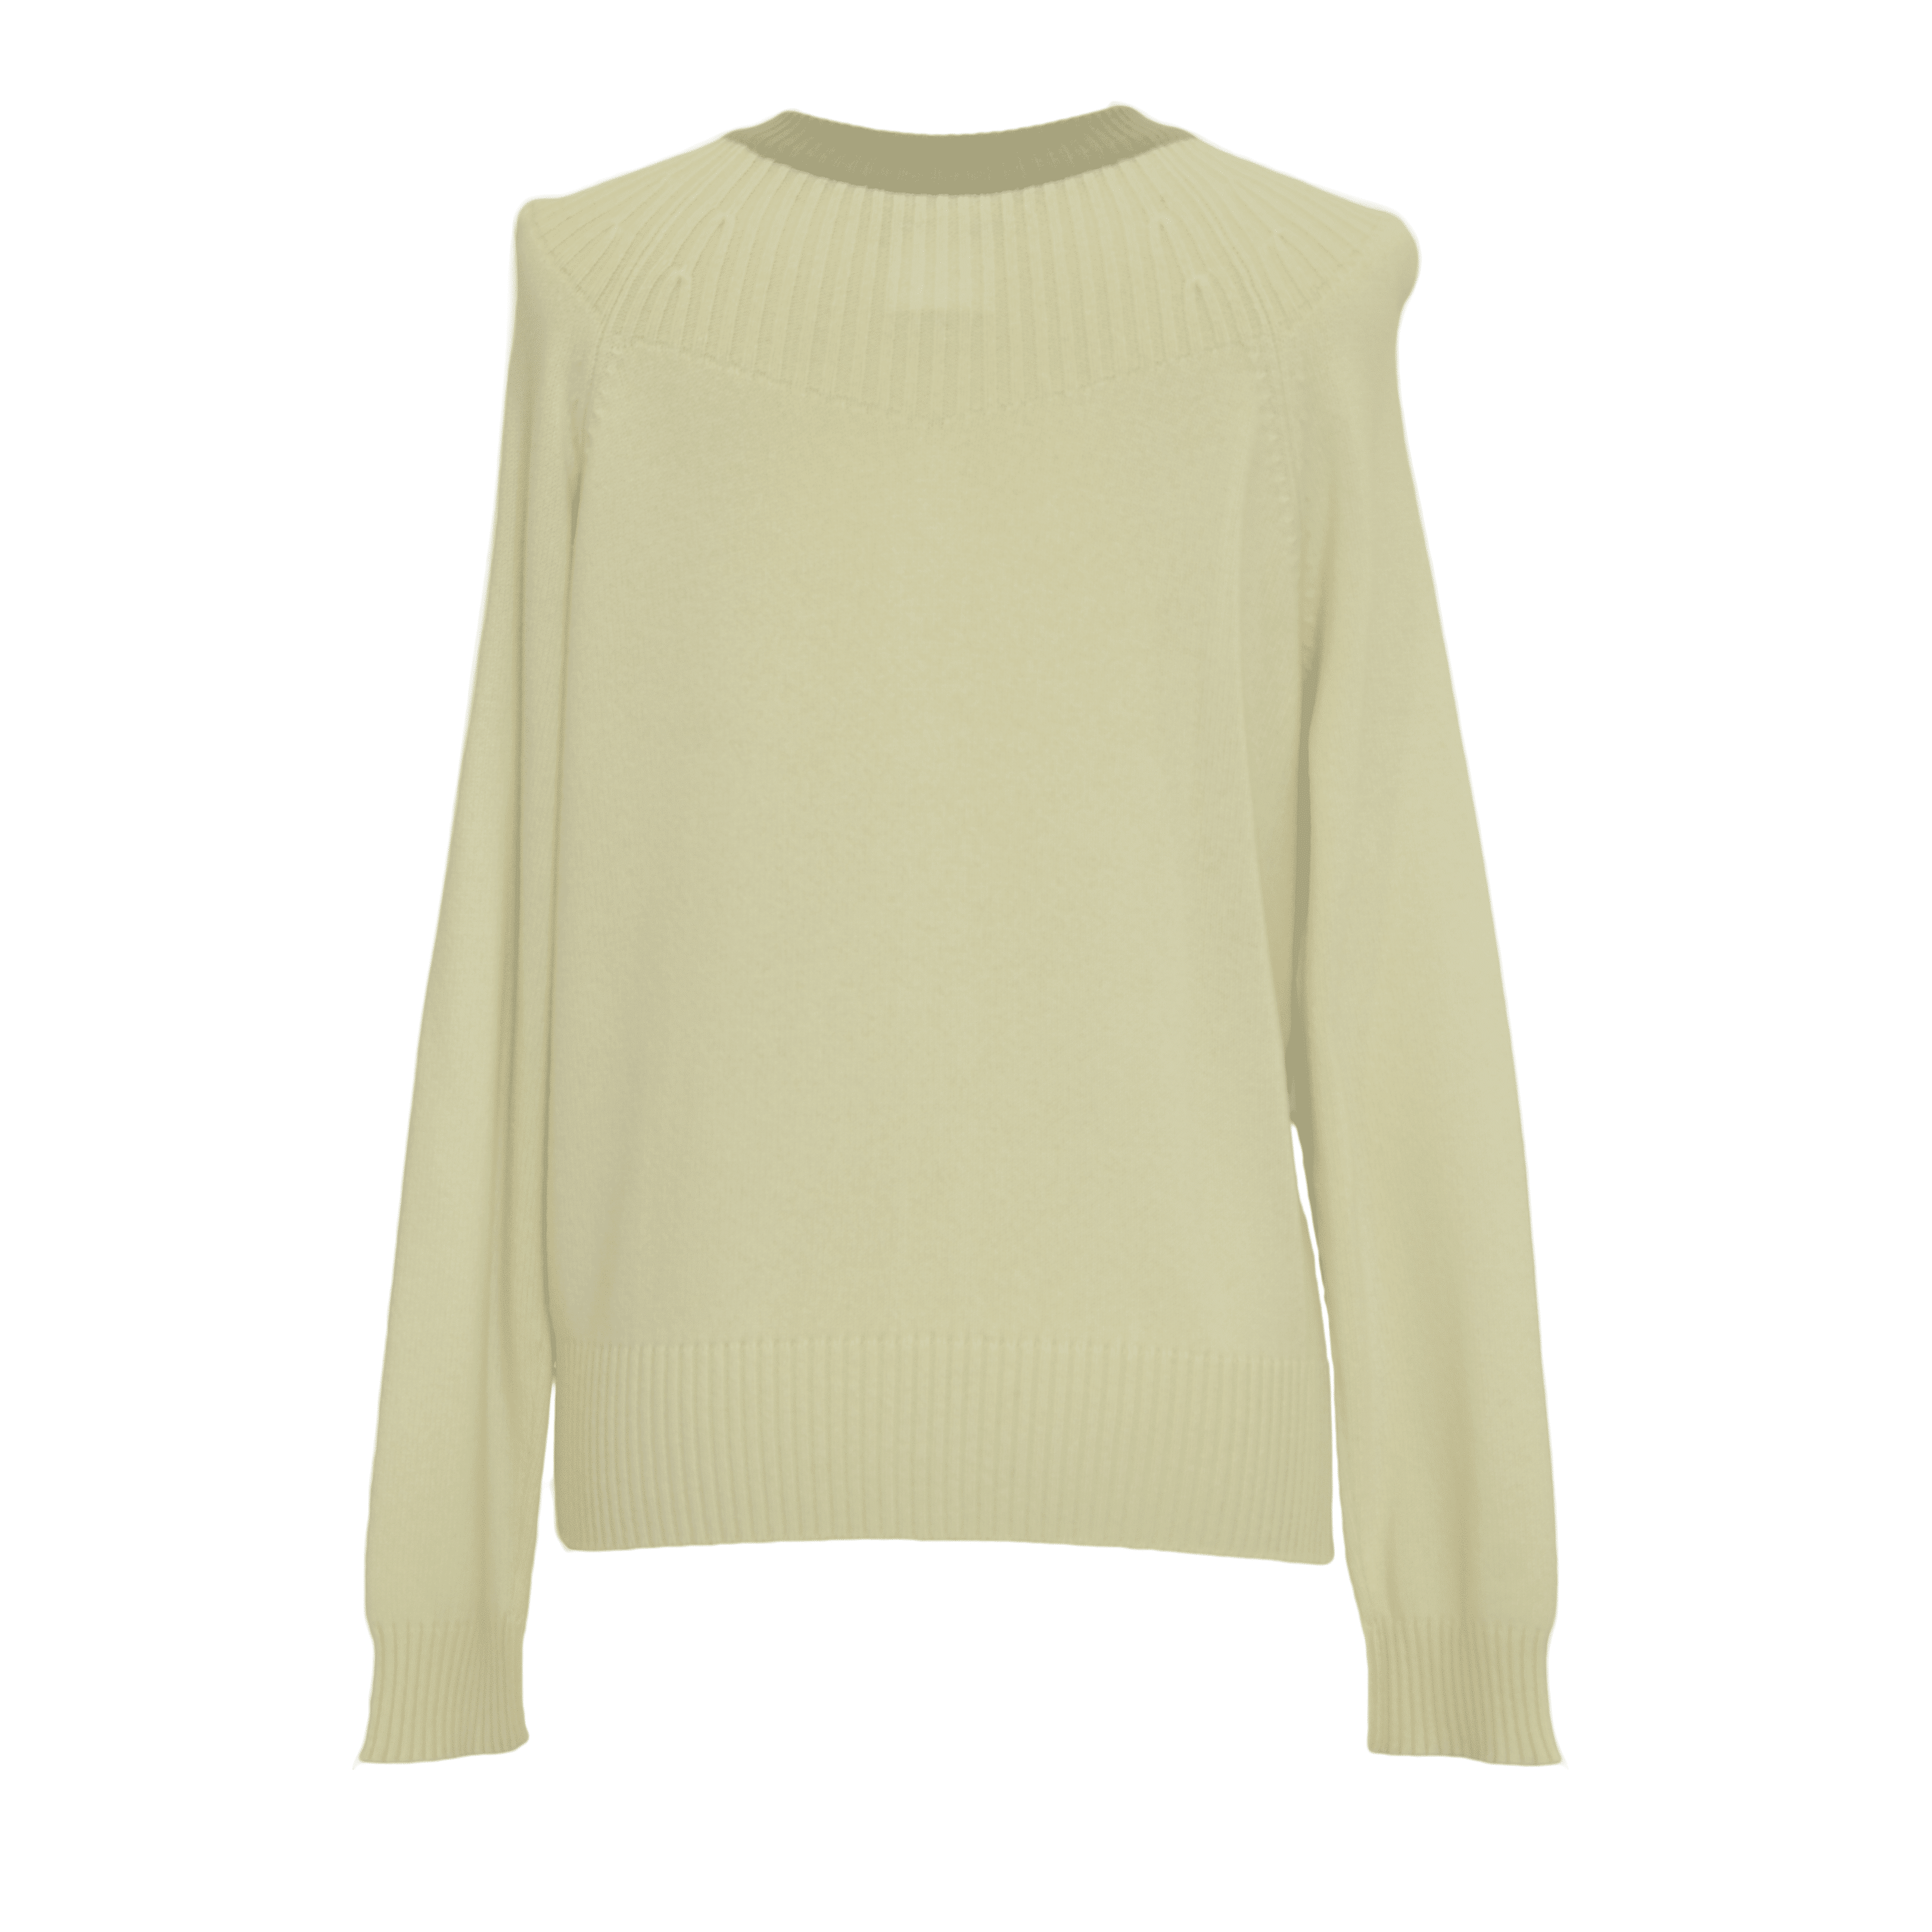 Ivory/Gray Trim Enamel Button Sweater Cardigan